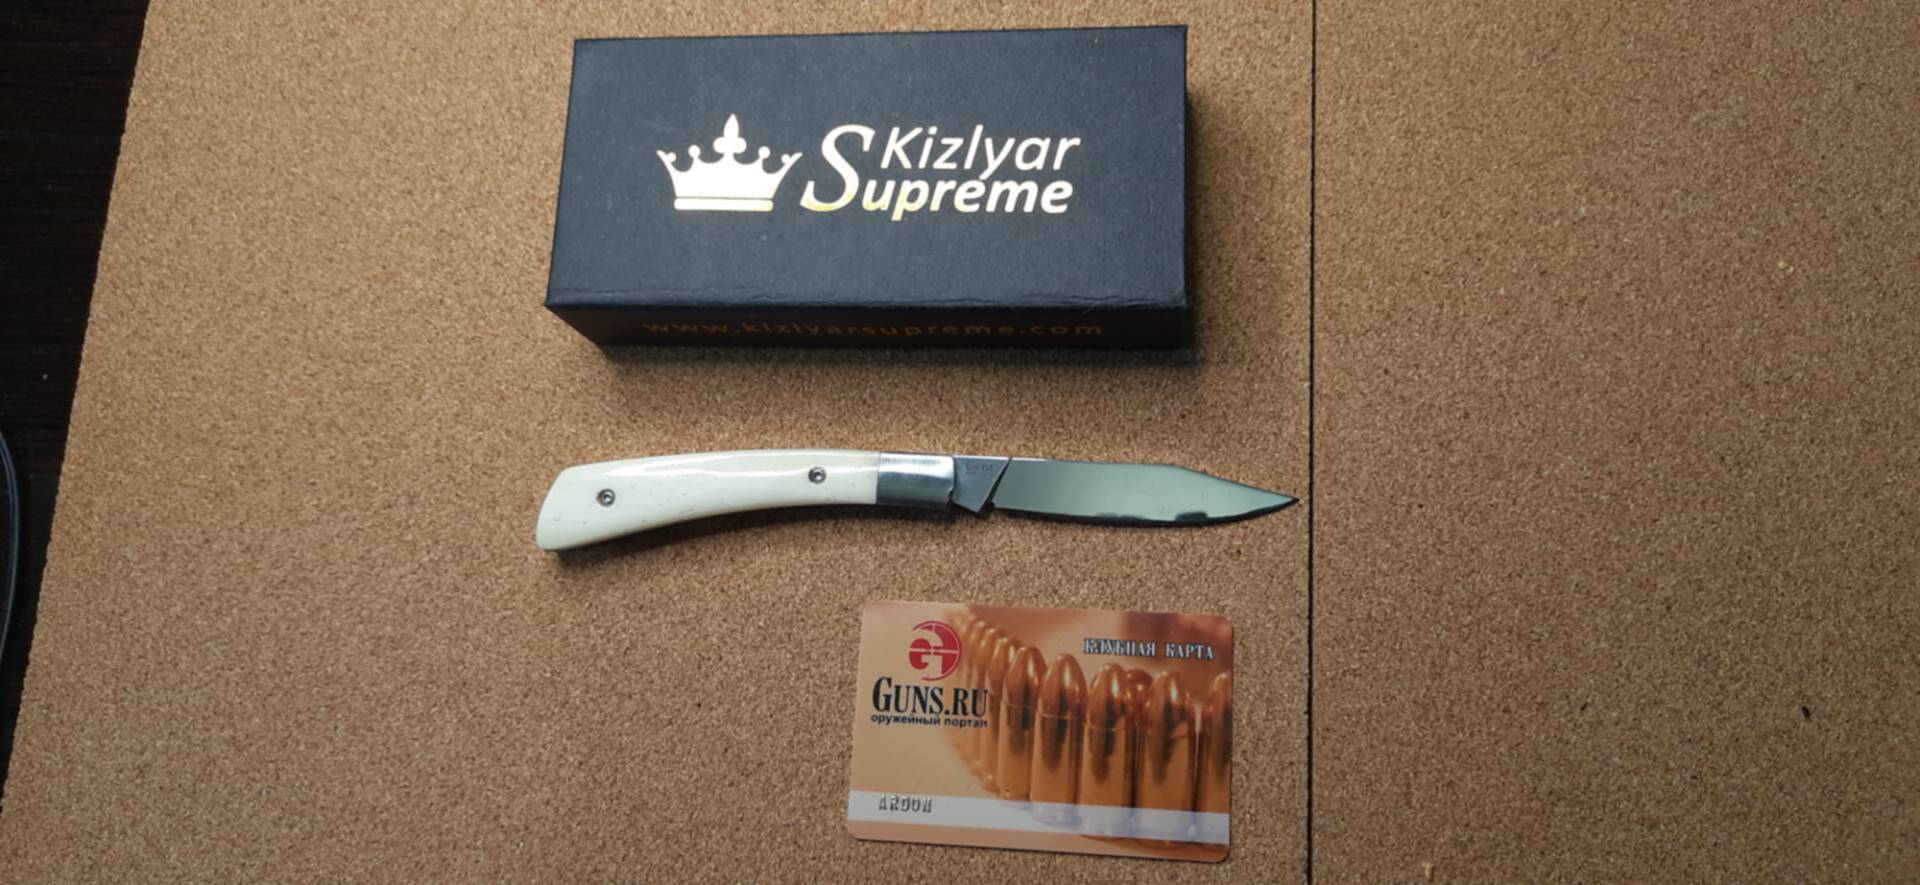 20 ножевых. Luxe sale нож. Распродажа ножей в связи с закрытием. YJ; Luxe sale нож.